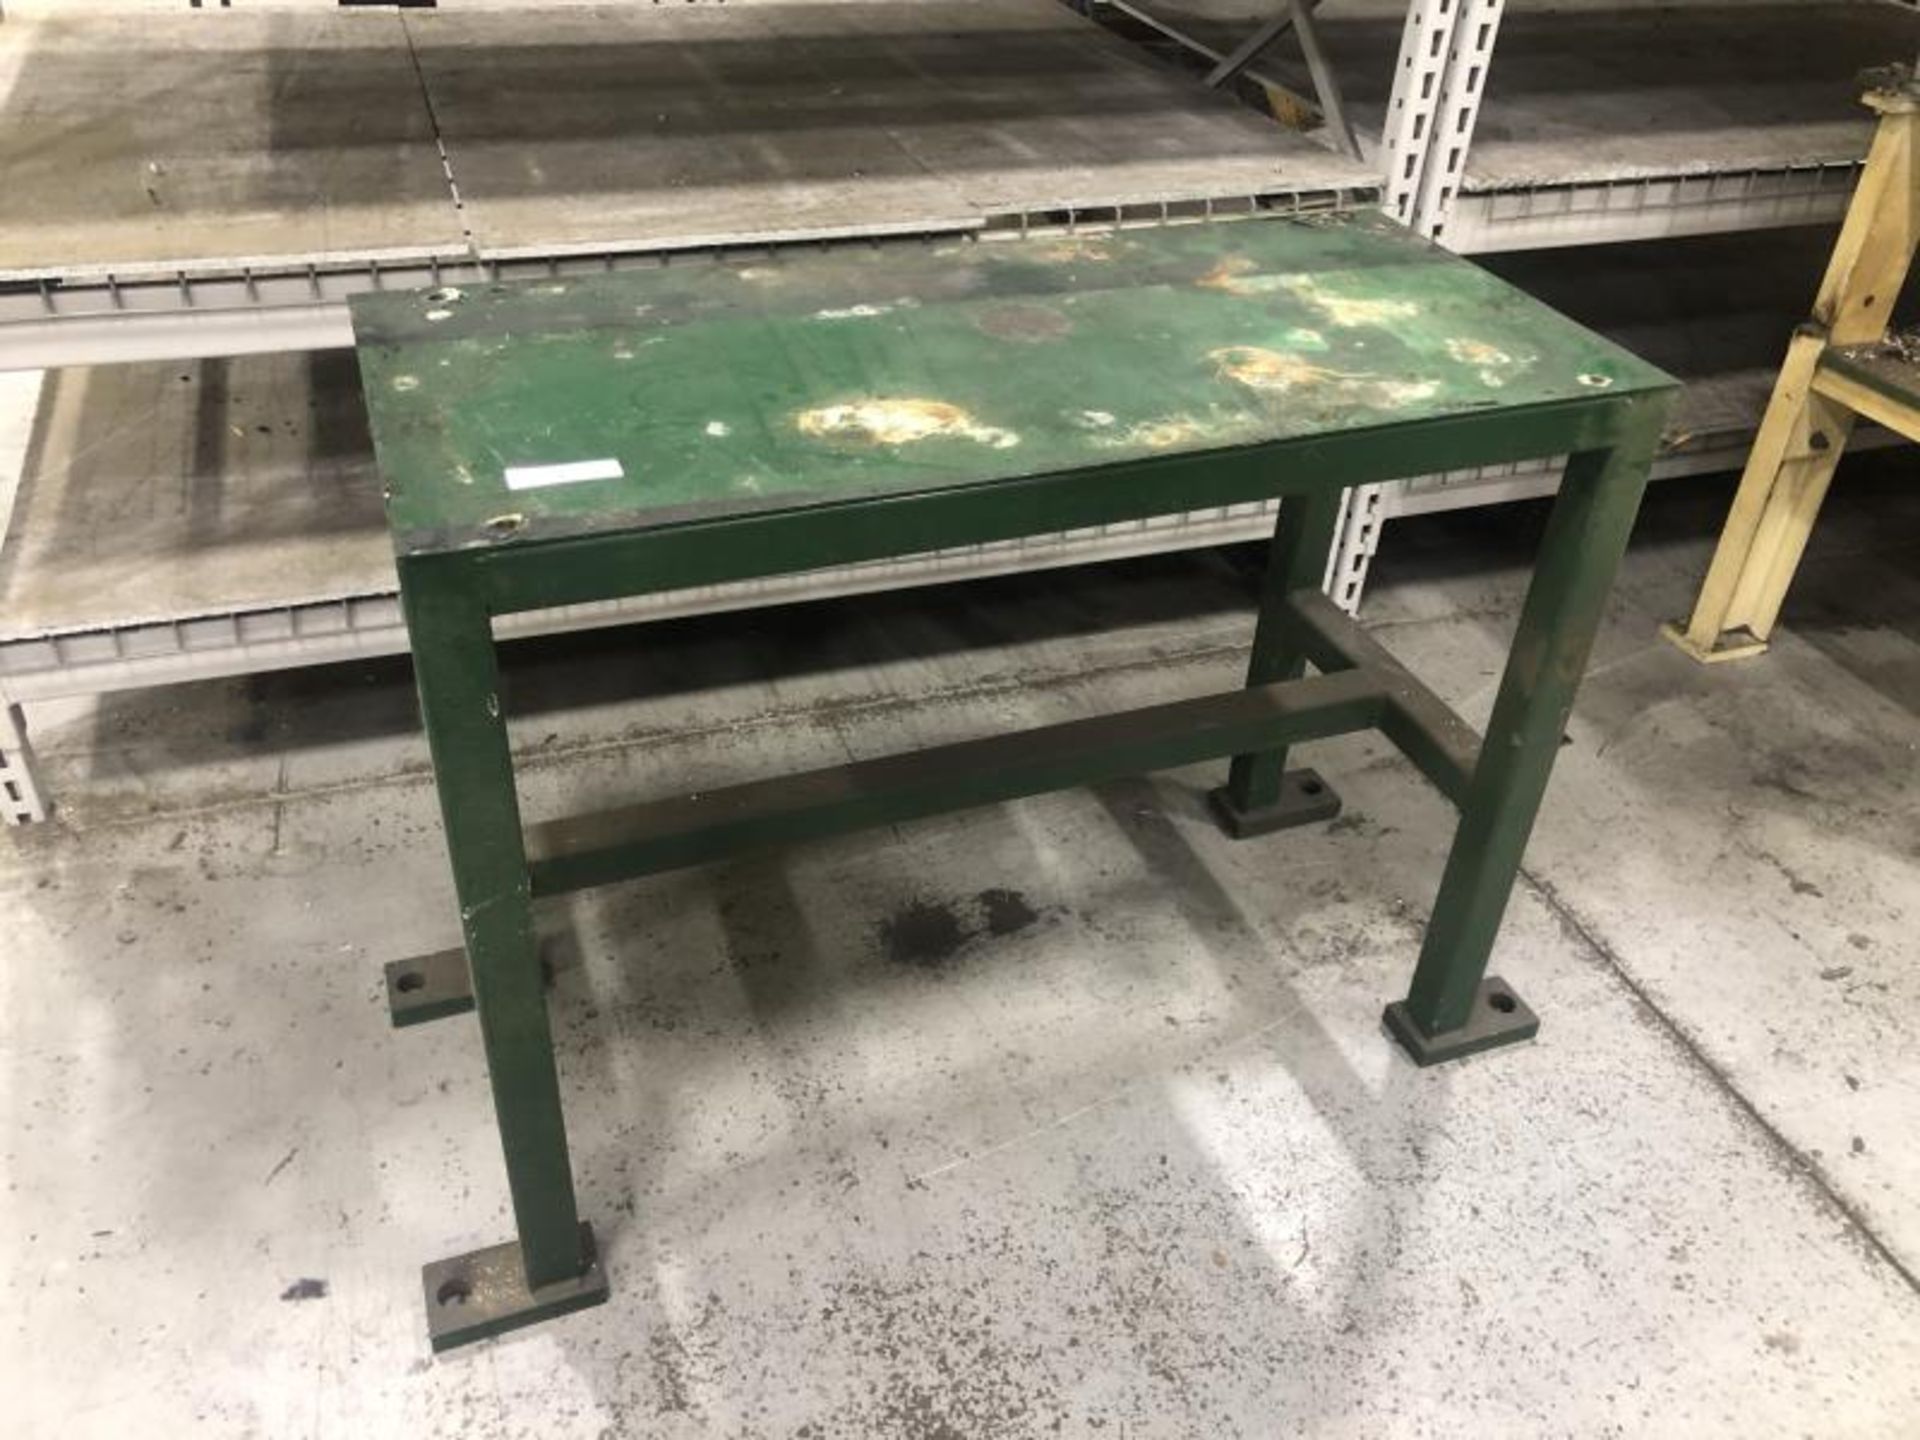 Green steel table 3'x18"